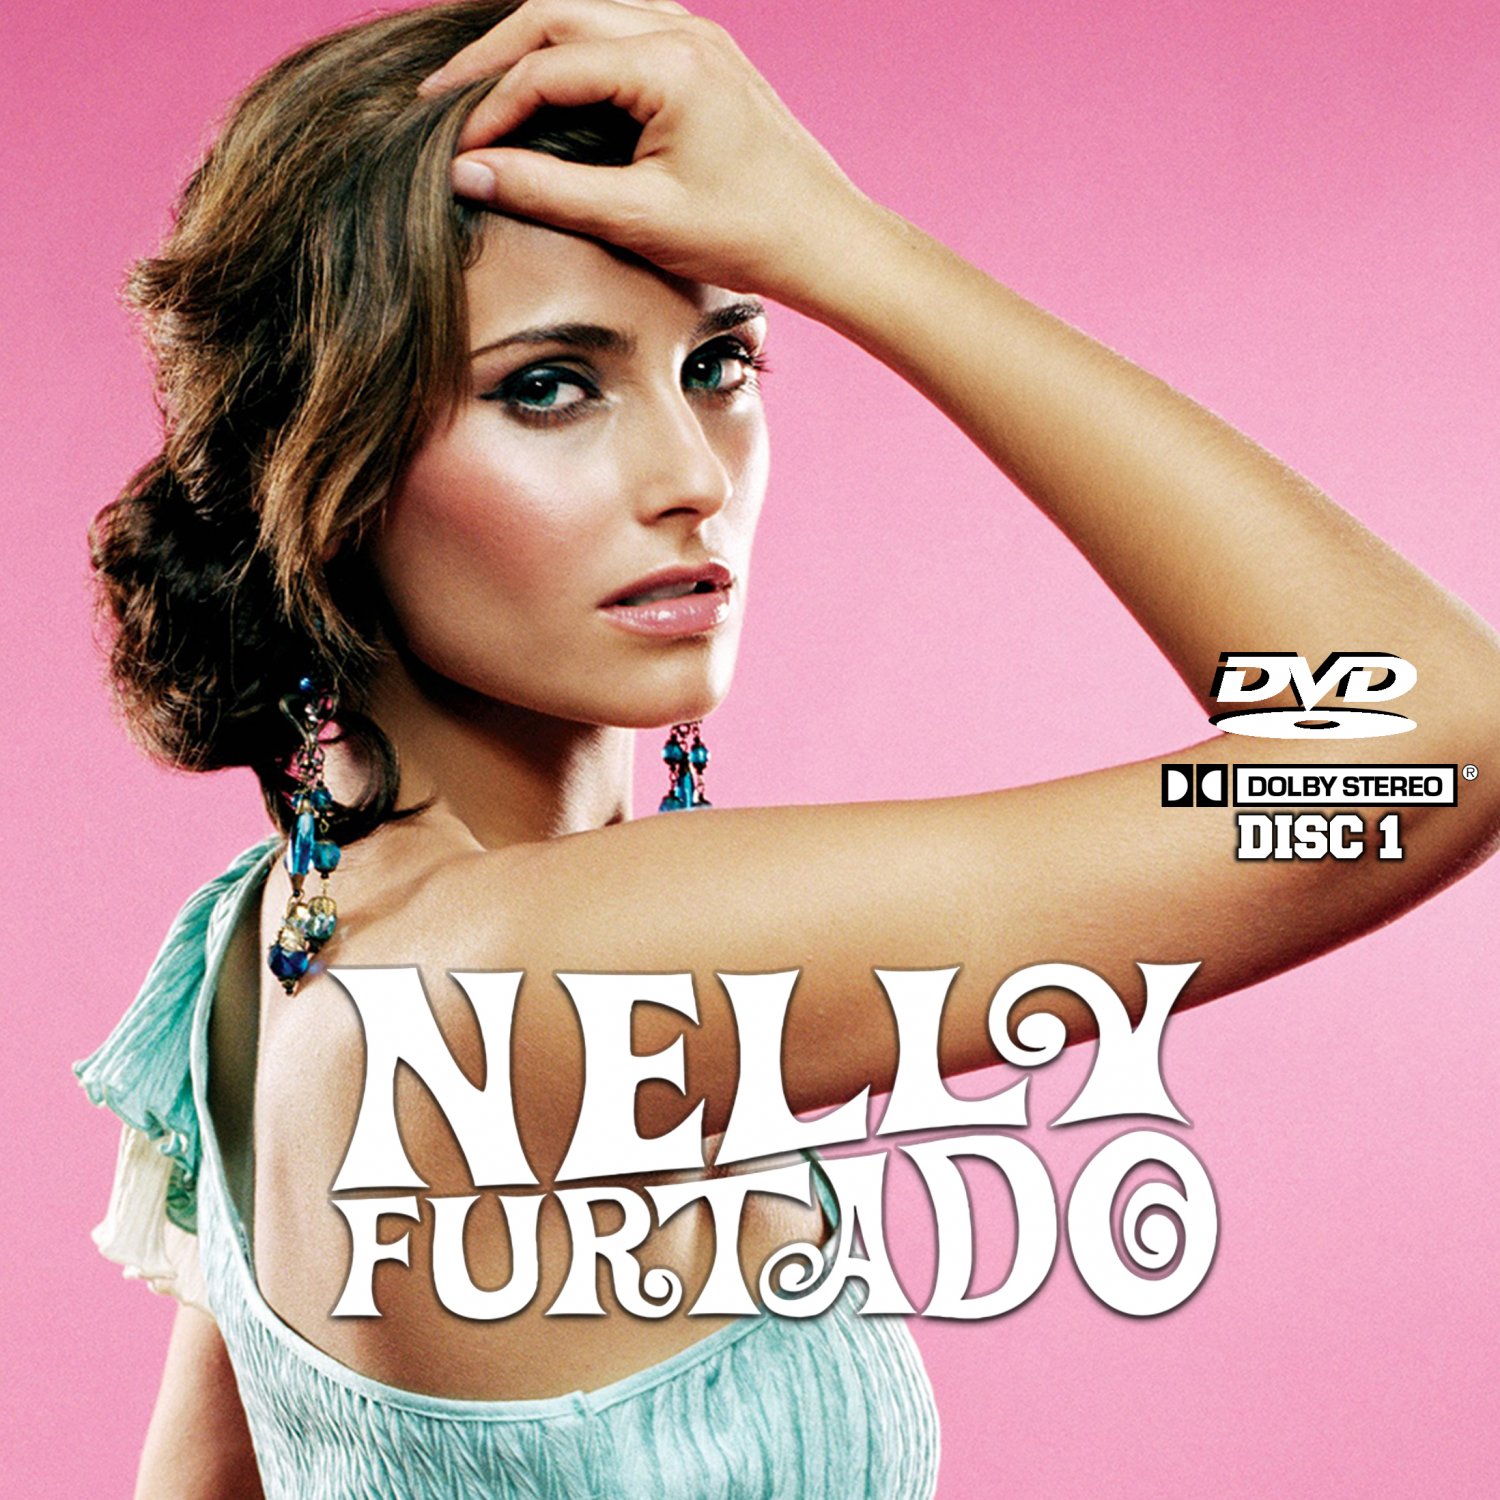 Nelly Furtado Music Videos Collection (2 DVD's) 40 Music Videos